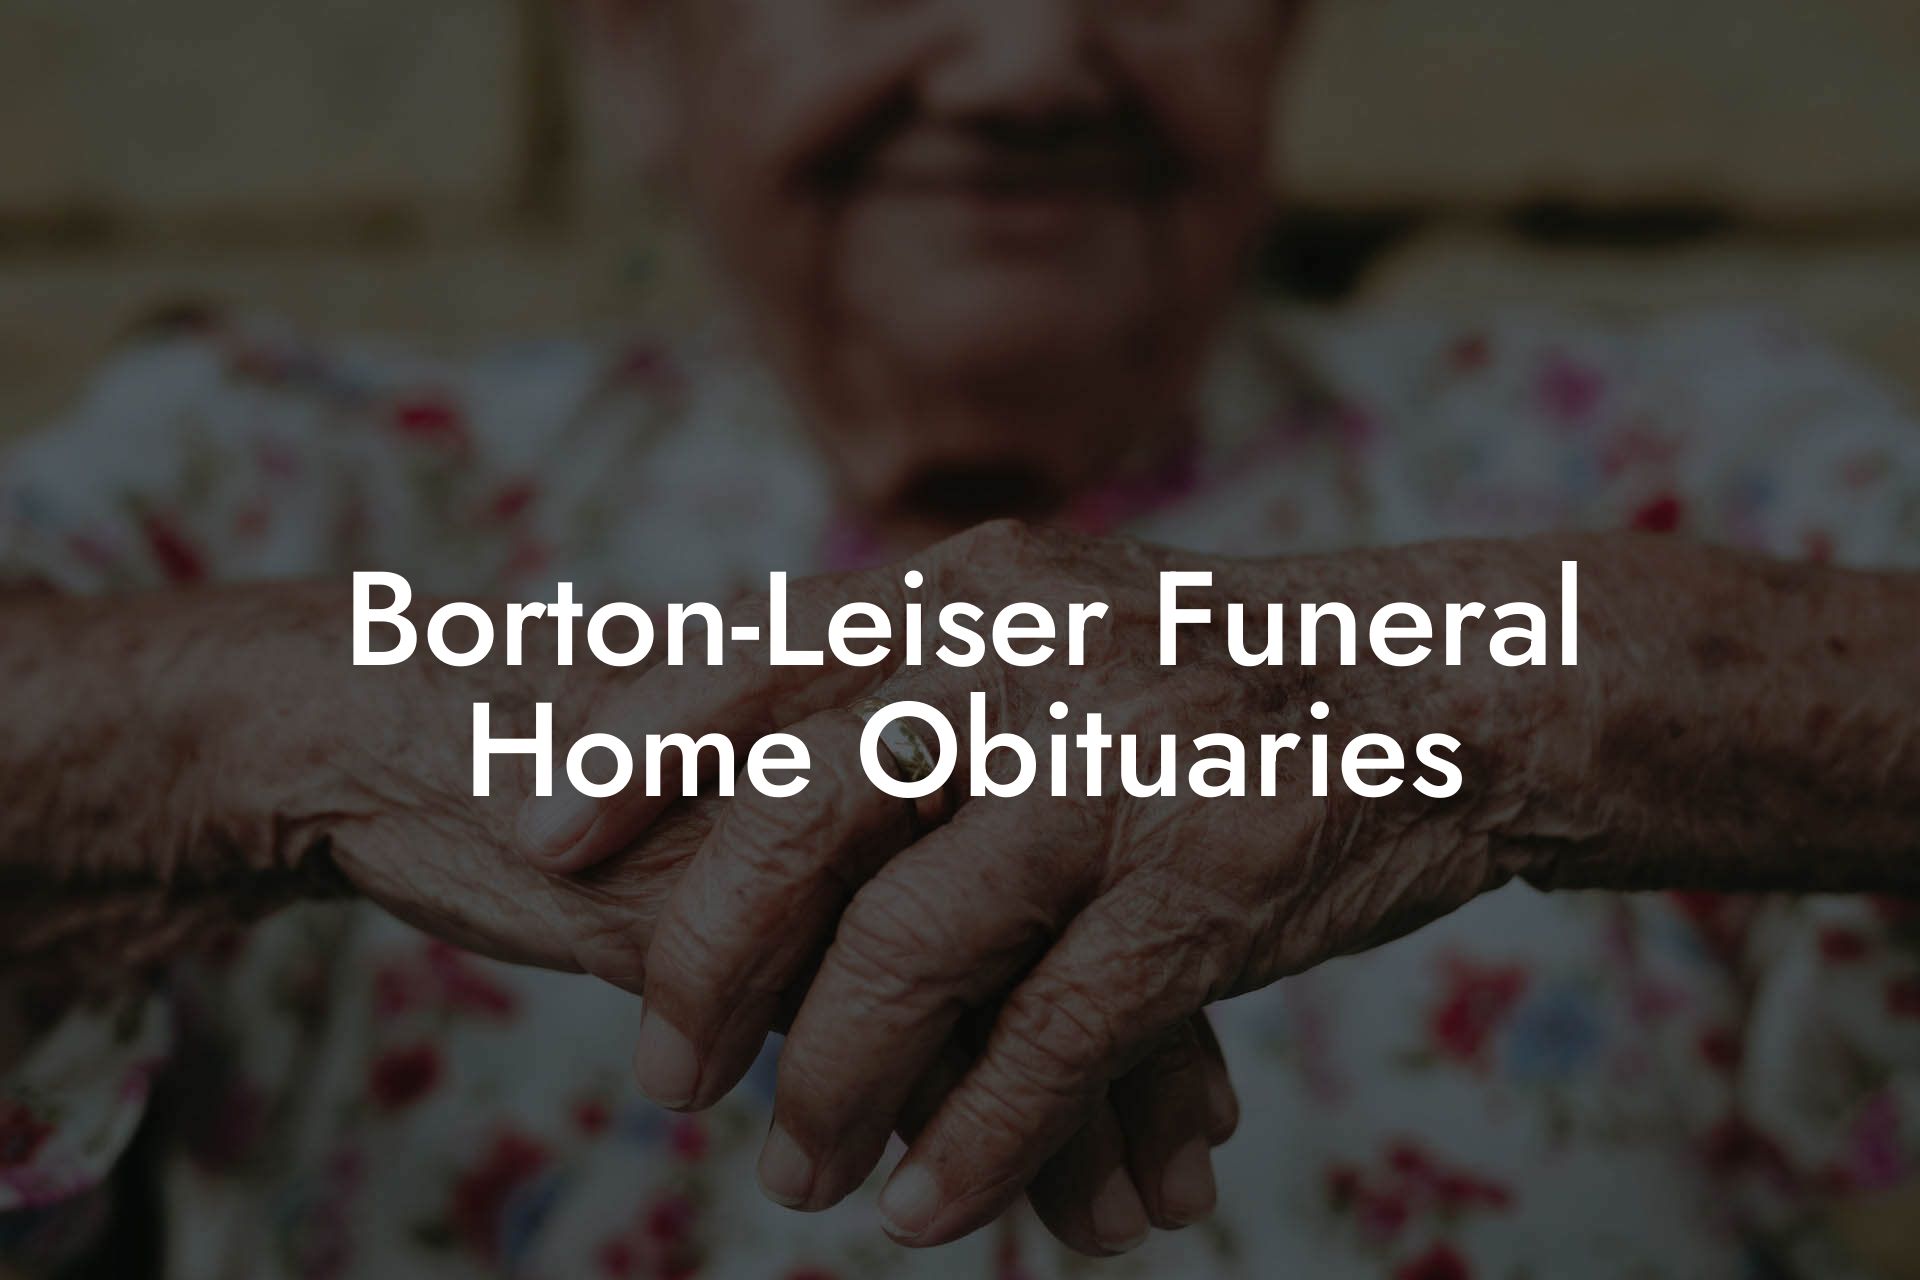 Borton-Leiser Funeral Home Obituaries